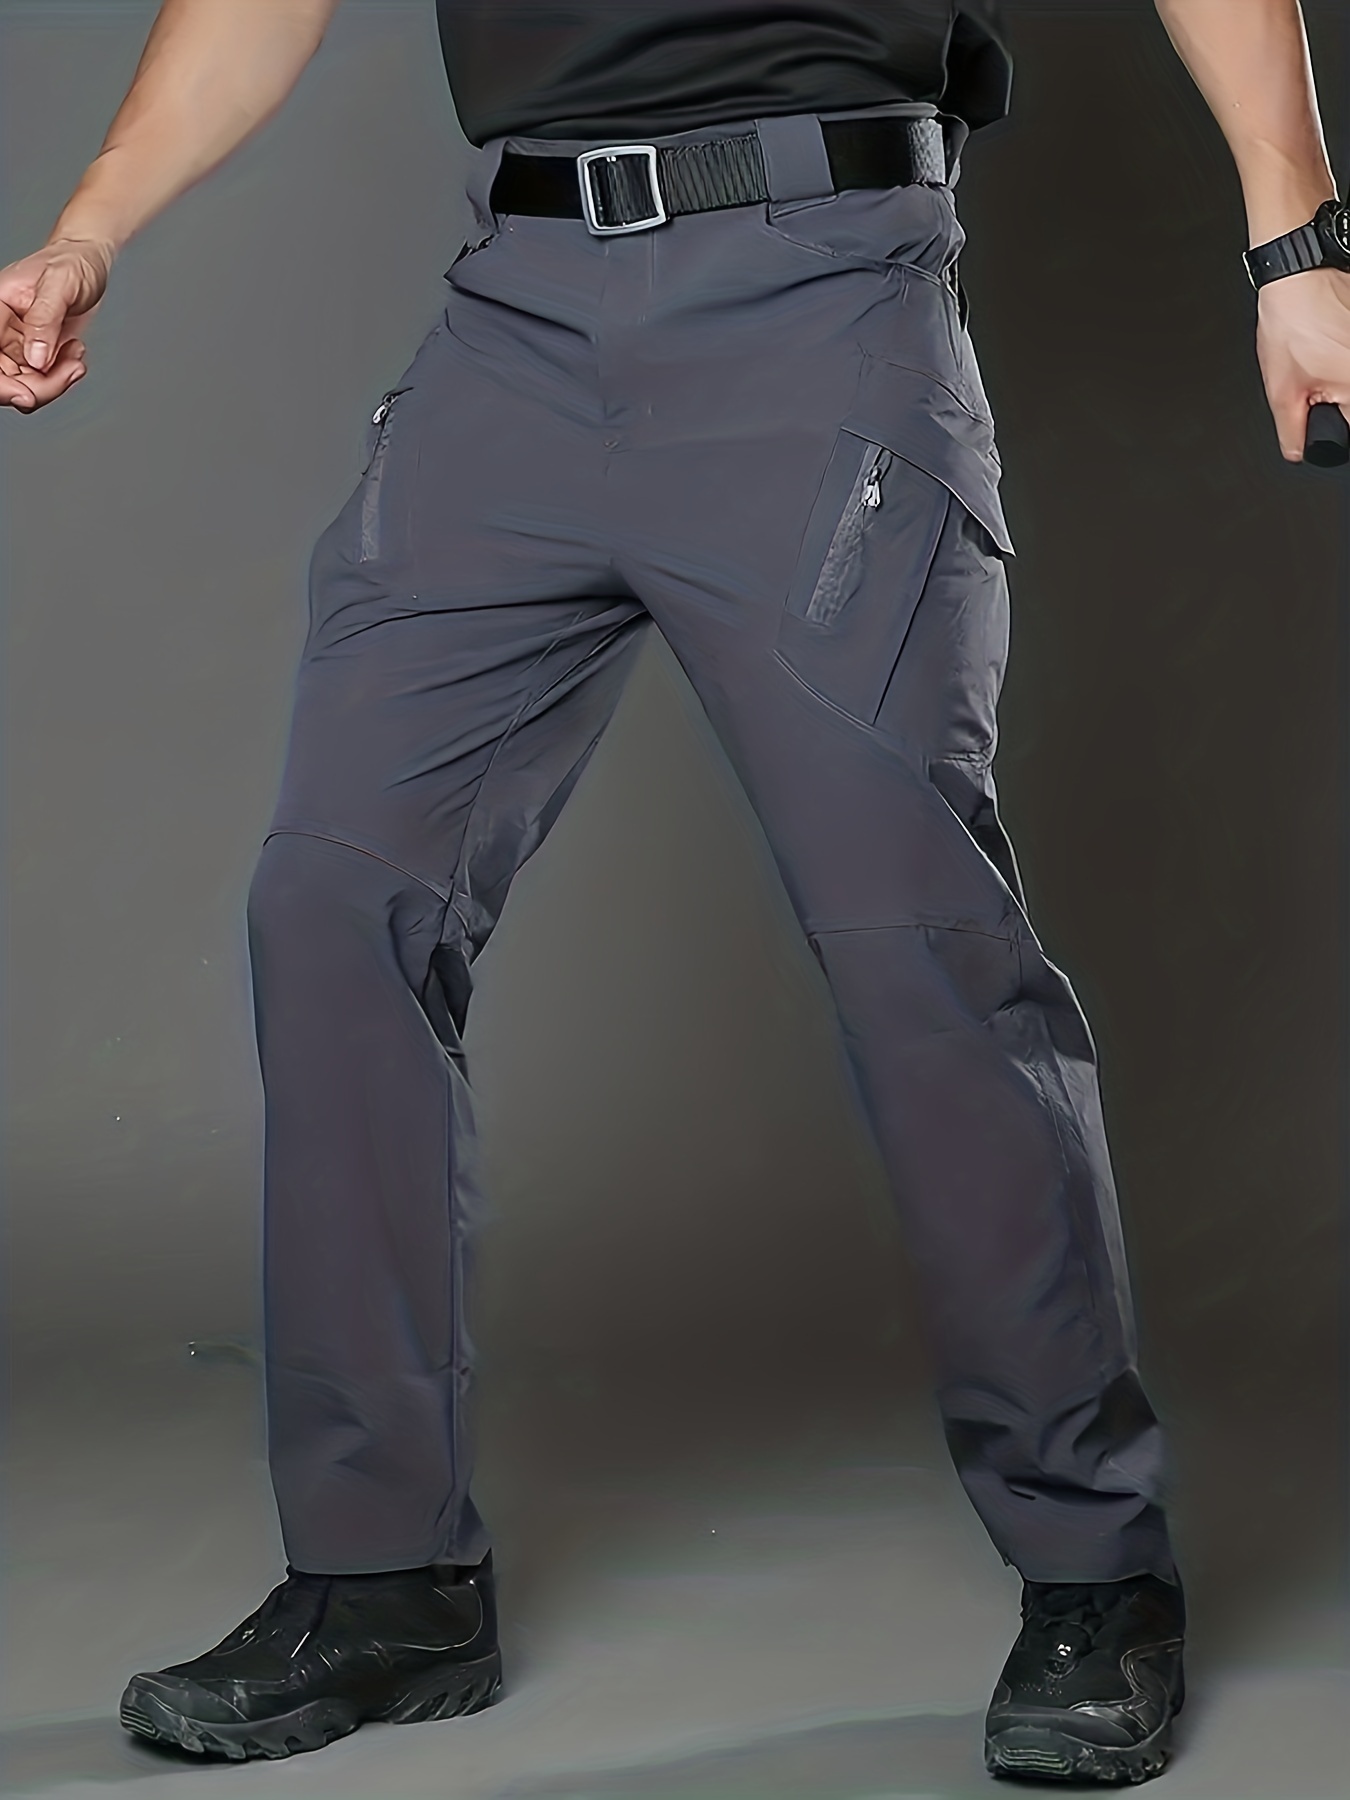 Pantalones de senderismo para hombre, secado rápido, ligeros, impermeables,  con múltiples bolsillos